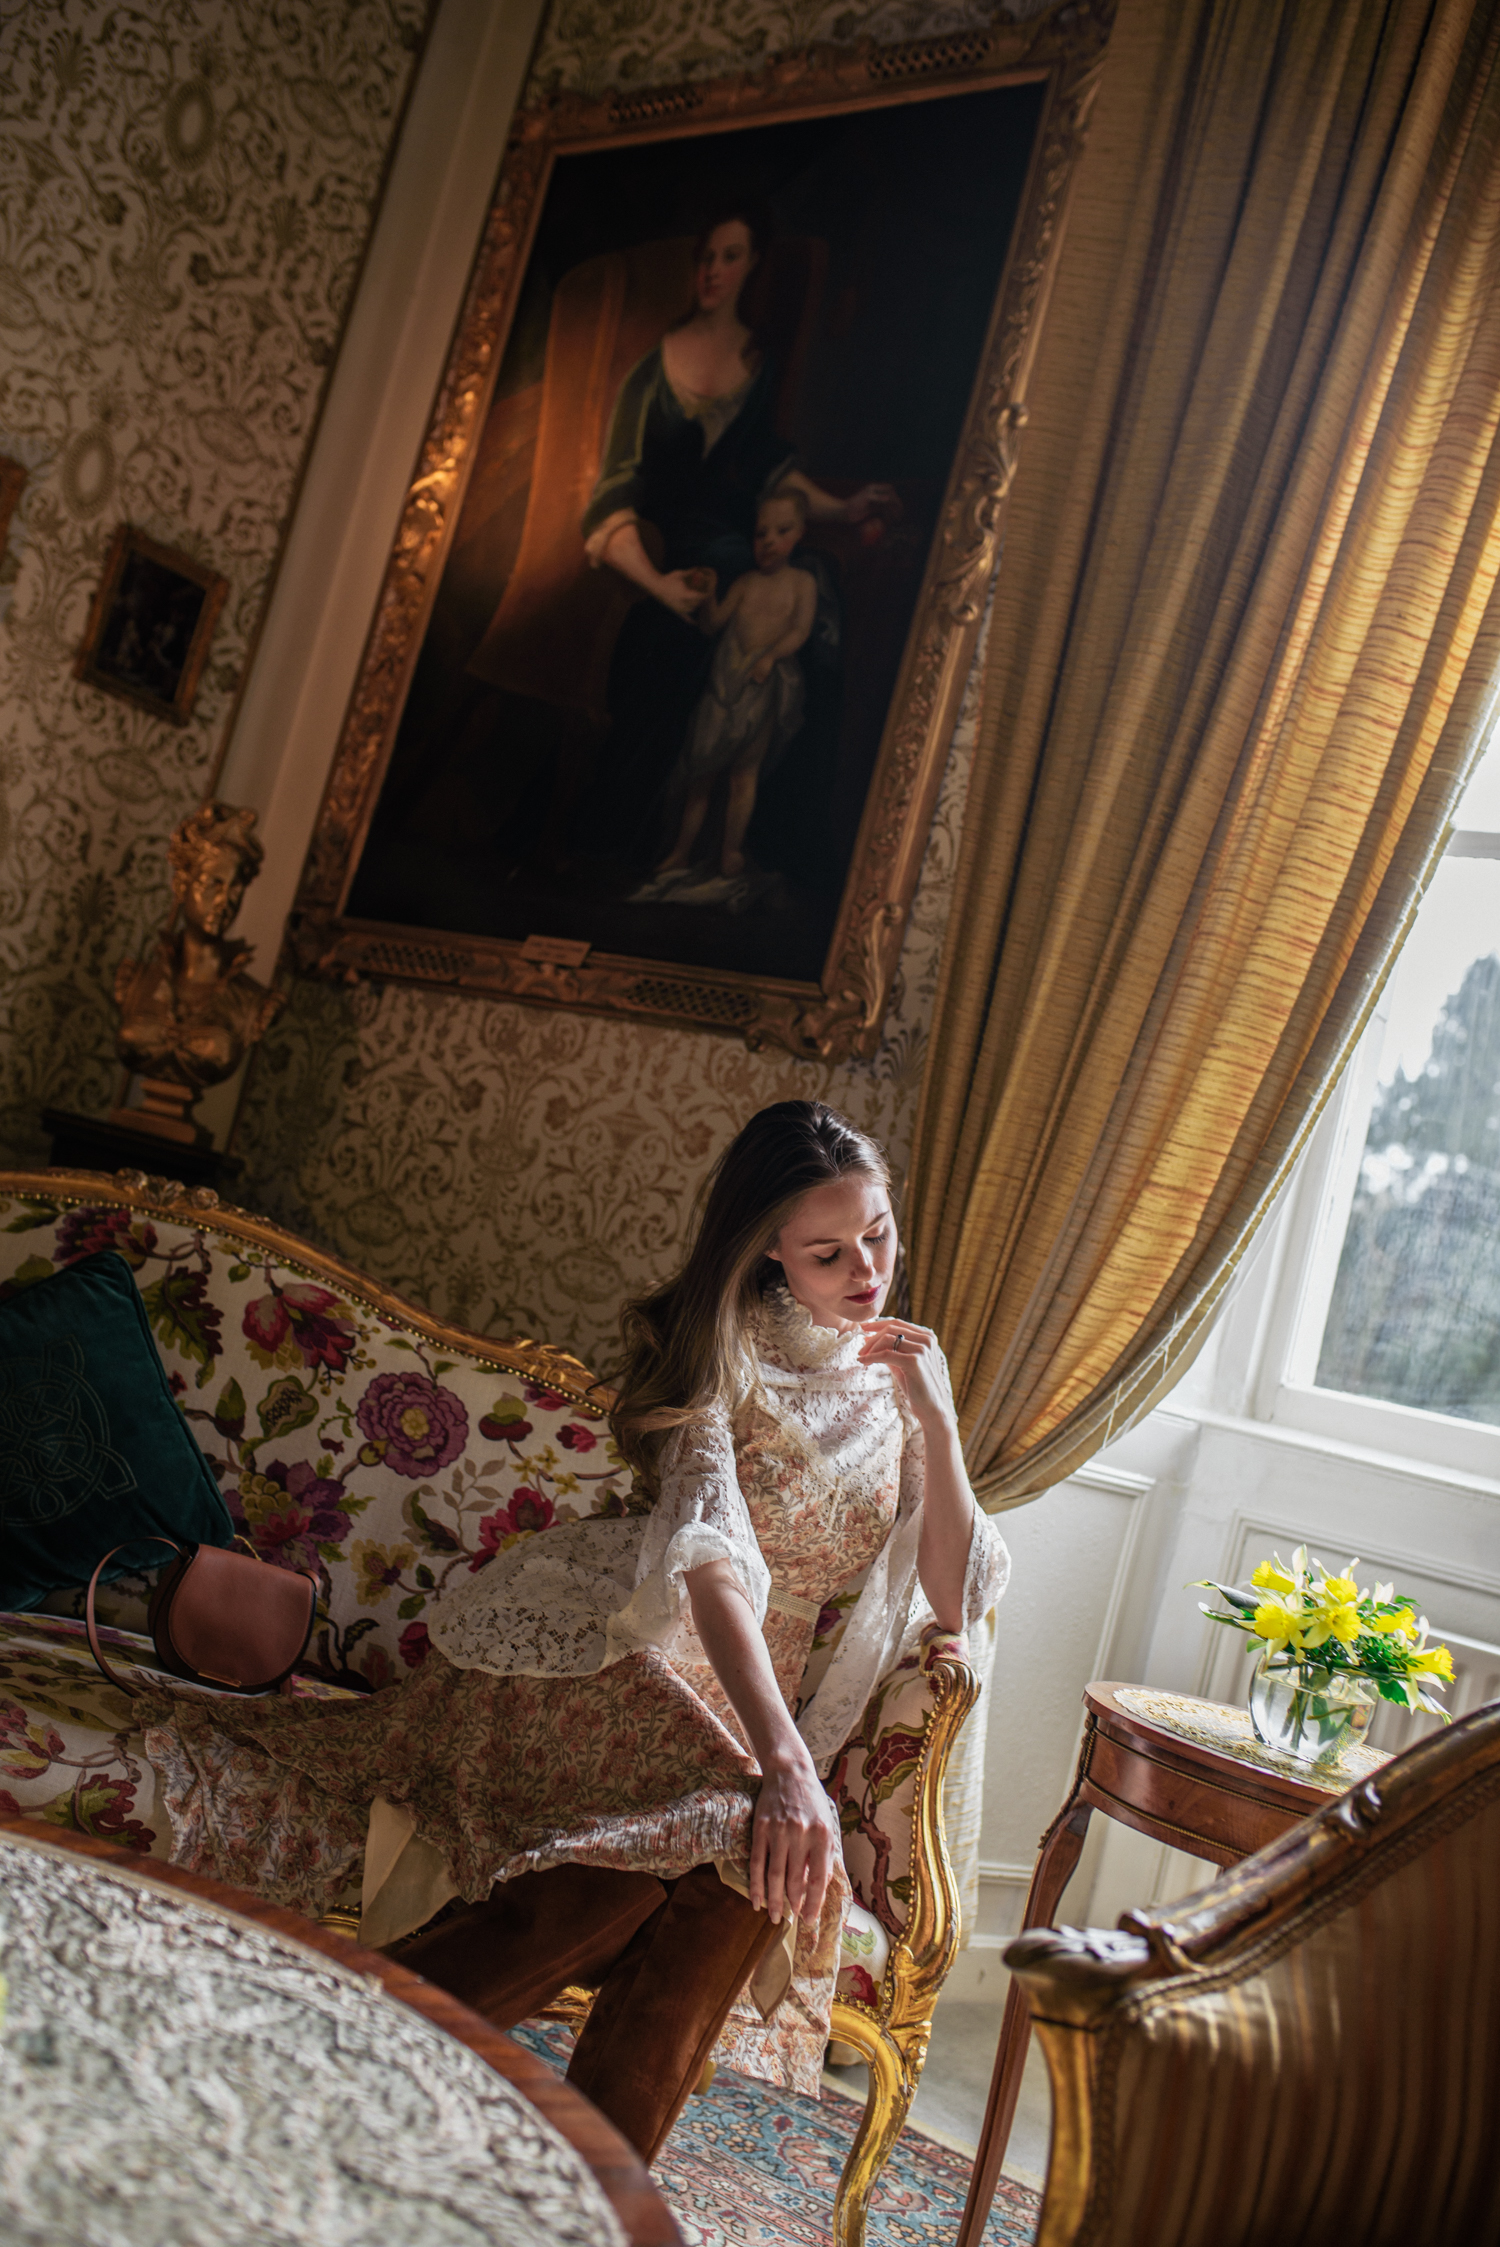 Alyssa Campanella of The A List blog wears the Aubrey dress from Paige denim at the romantic Irish castle Cabra Castle in Ireland